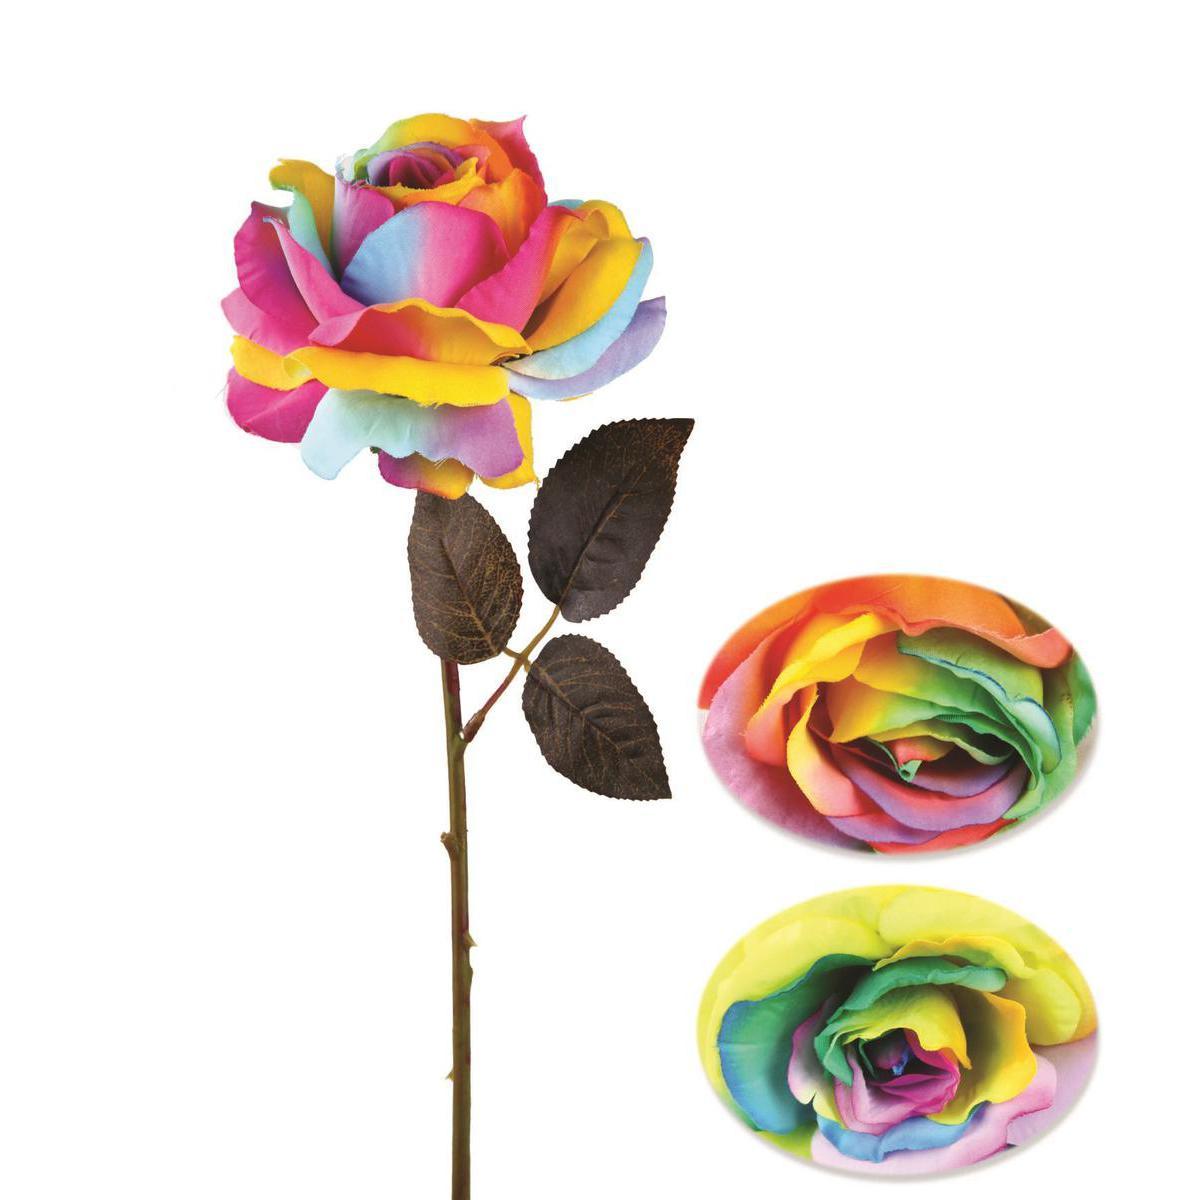 Tige de rose arc en ciel - Plastique, Polyester - H 48 cm - Multicolore